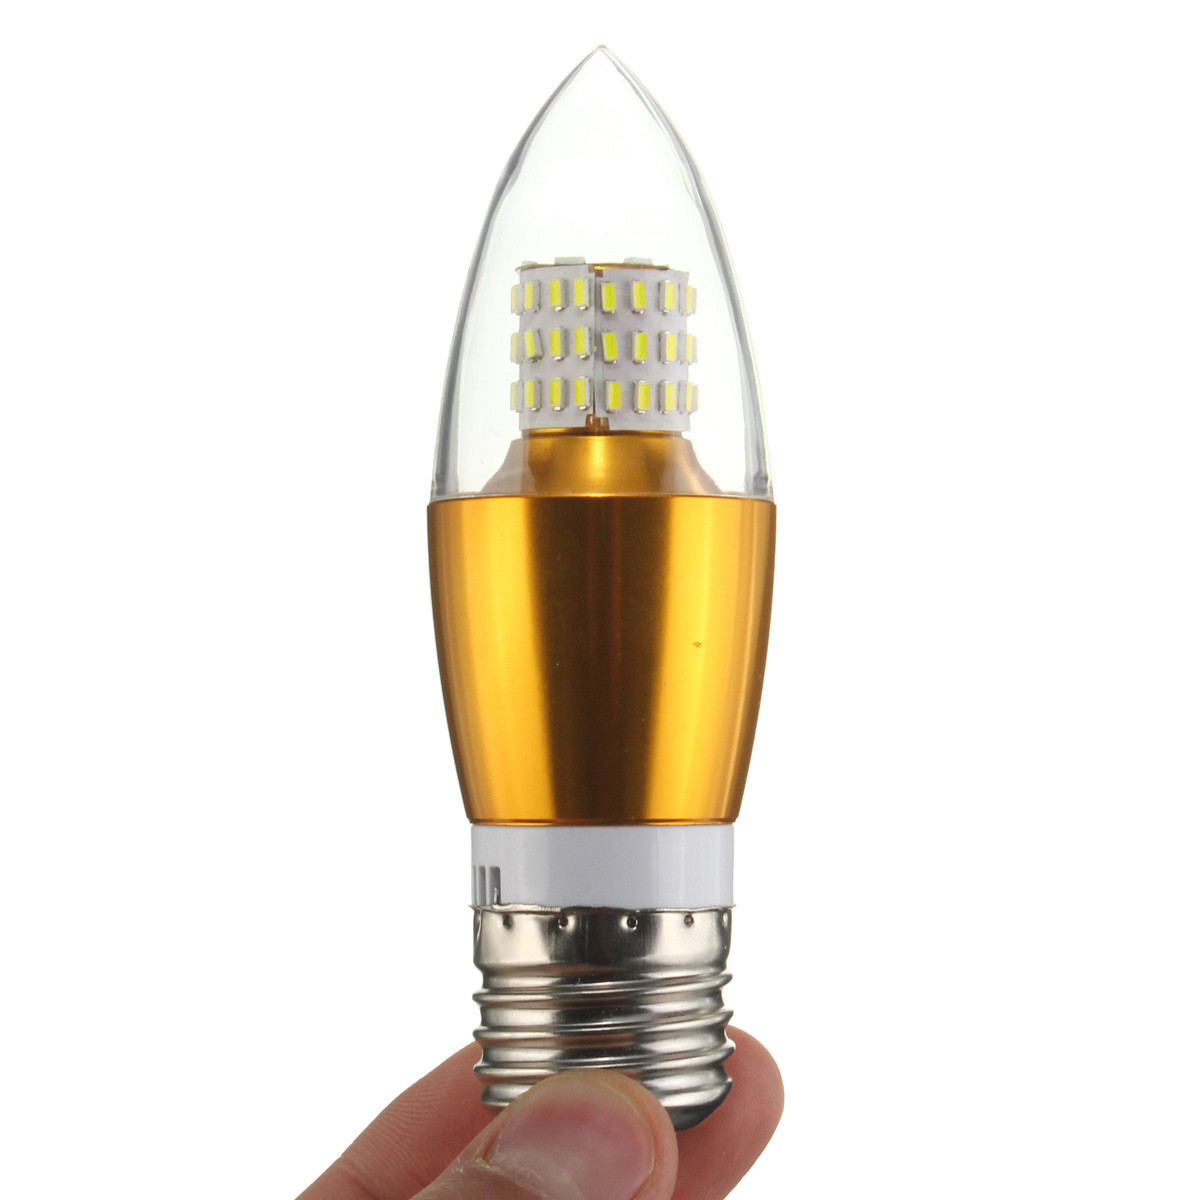 Dimmable-E27-E14-E12-7W-60-SMD-3014-LED-Pure-White-Warm-White-Candle-Light-Lamp-Bulb-AC110V-1082667-7